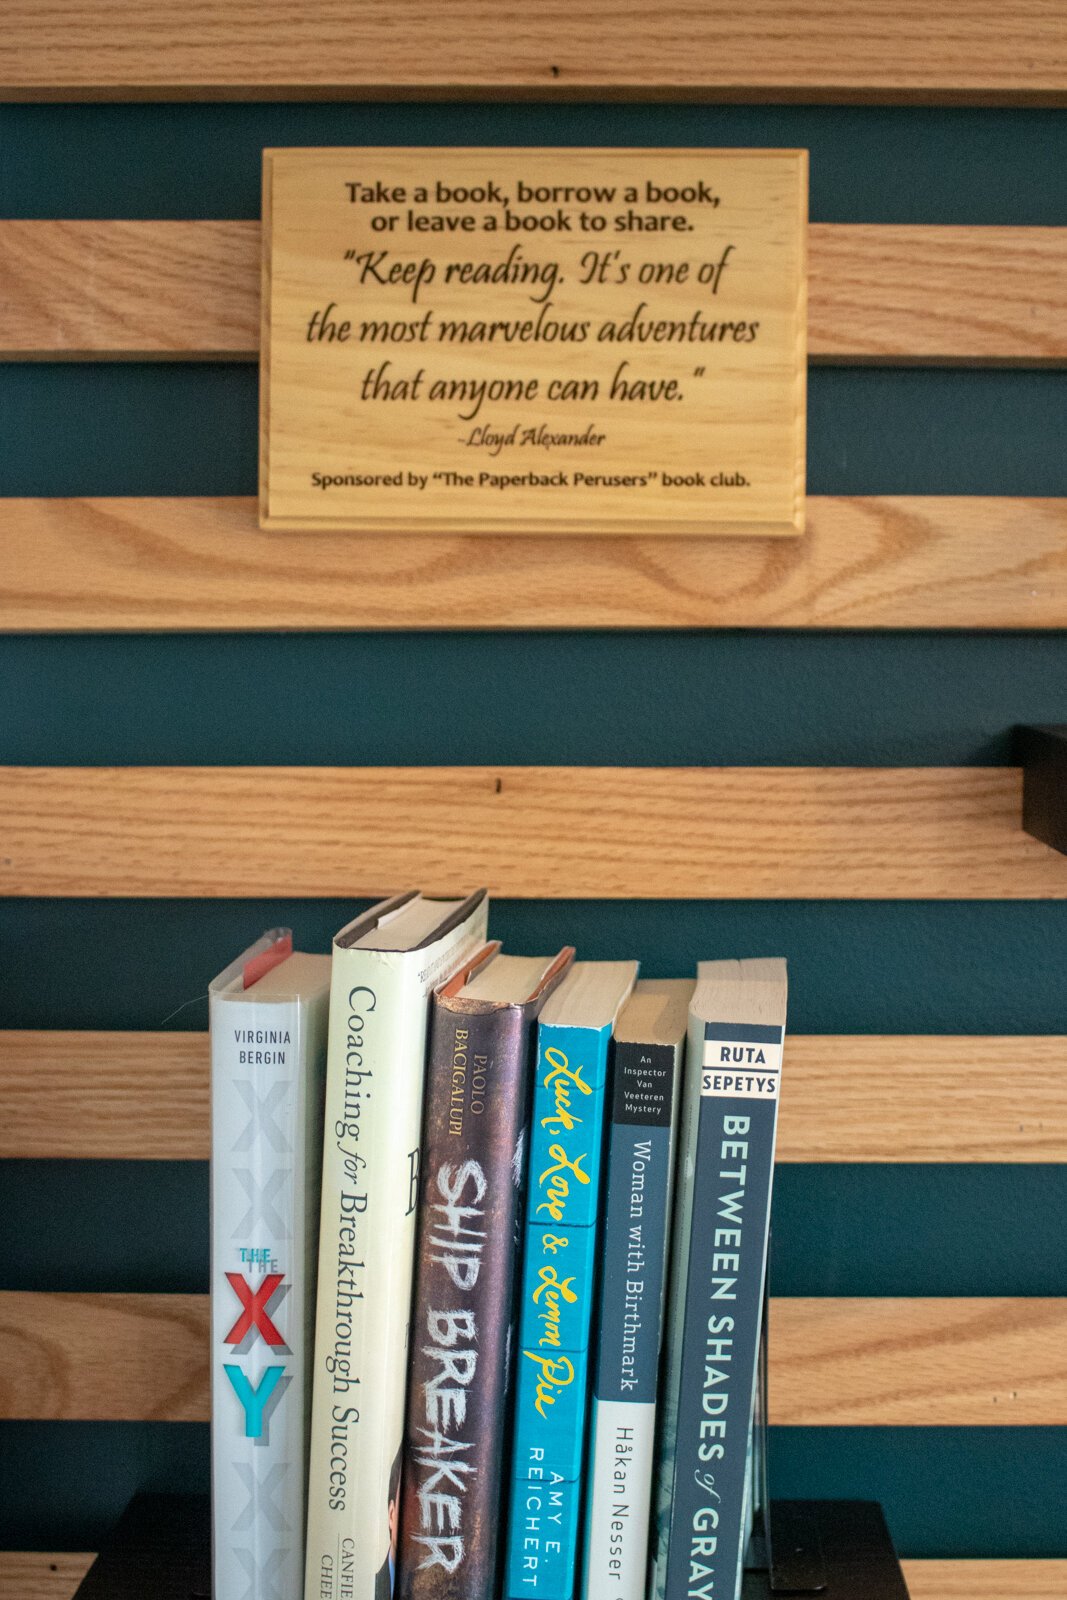 A bookshelf with a "take a book, borrow a book, leave a book" policy.